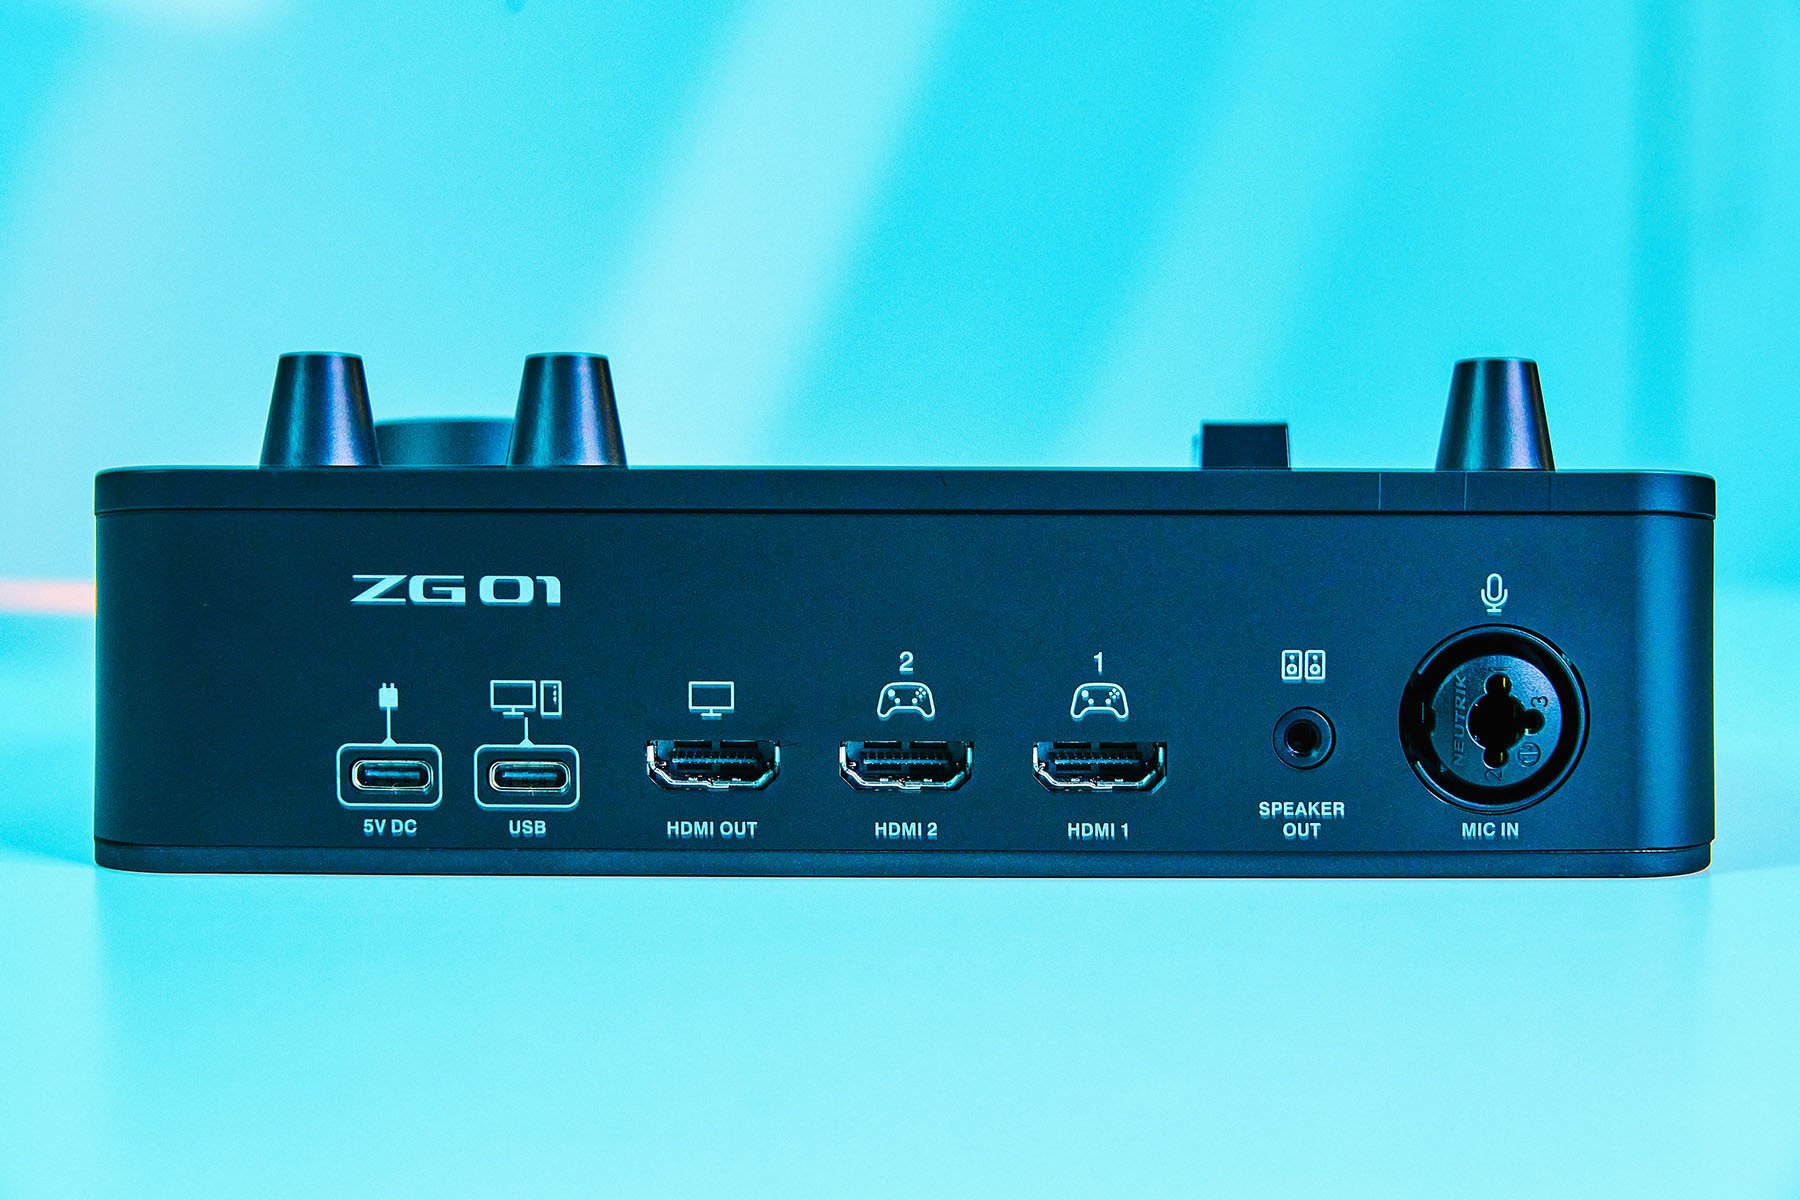 ZG01 的音源連結接口主要集於機身後側，包括兩組 USB Type-C 插（一個可連接 USB 電源變壓器提供 5V DC 電源供應，另一個則是可以配隨附的 USB 2.0 纜線連接電腦）；一旁則有 2 進1 出的 HDMI 插，兩個 HDMI 輸入端可以直接連接遊戲主機，而 HDMI 輸出插則能將接在 HDMI 1、2 的遊戲主機畫面連接到電視或螢幕顯示器；另外還有一組 SPEAKER OUT 插，以及用於連接 XLR 麥克風或 TRS 耳機的 MIC IN 插。